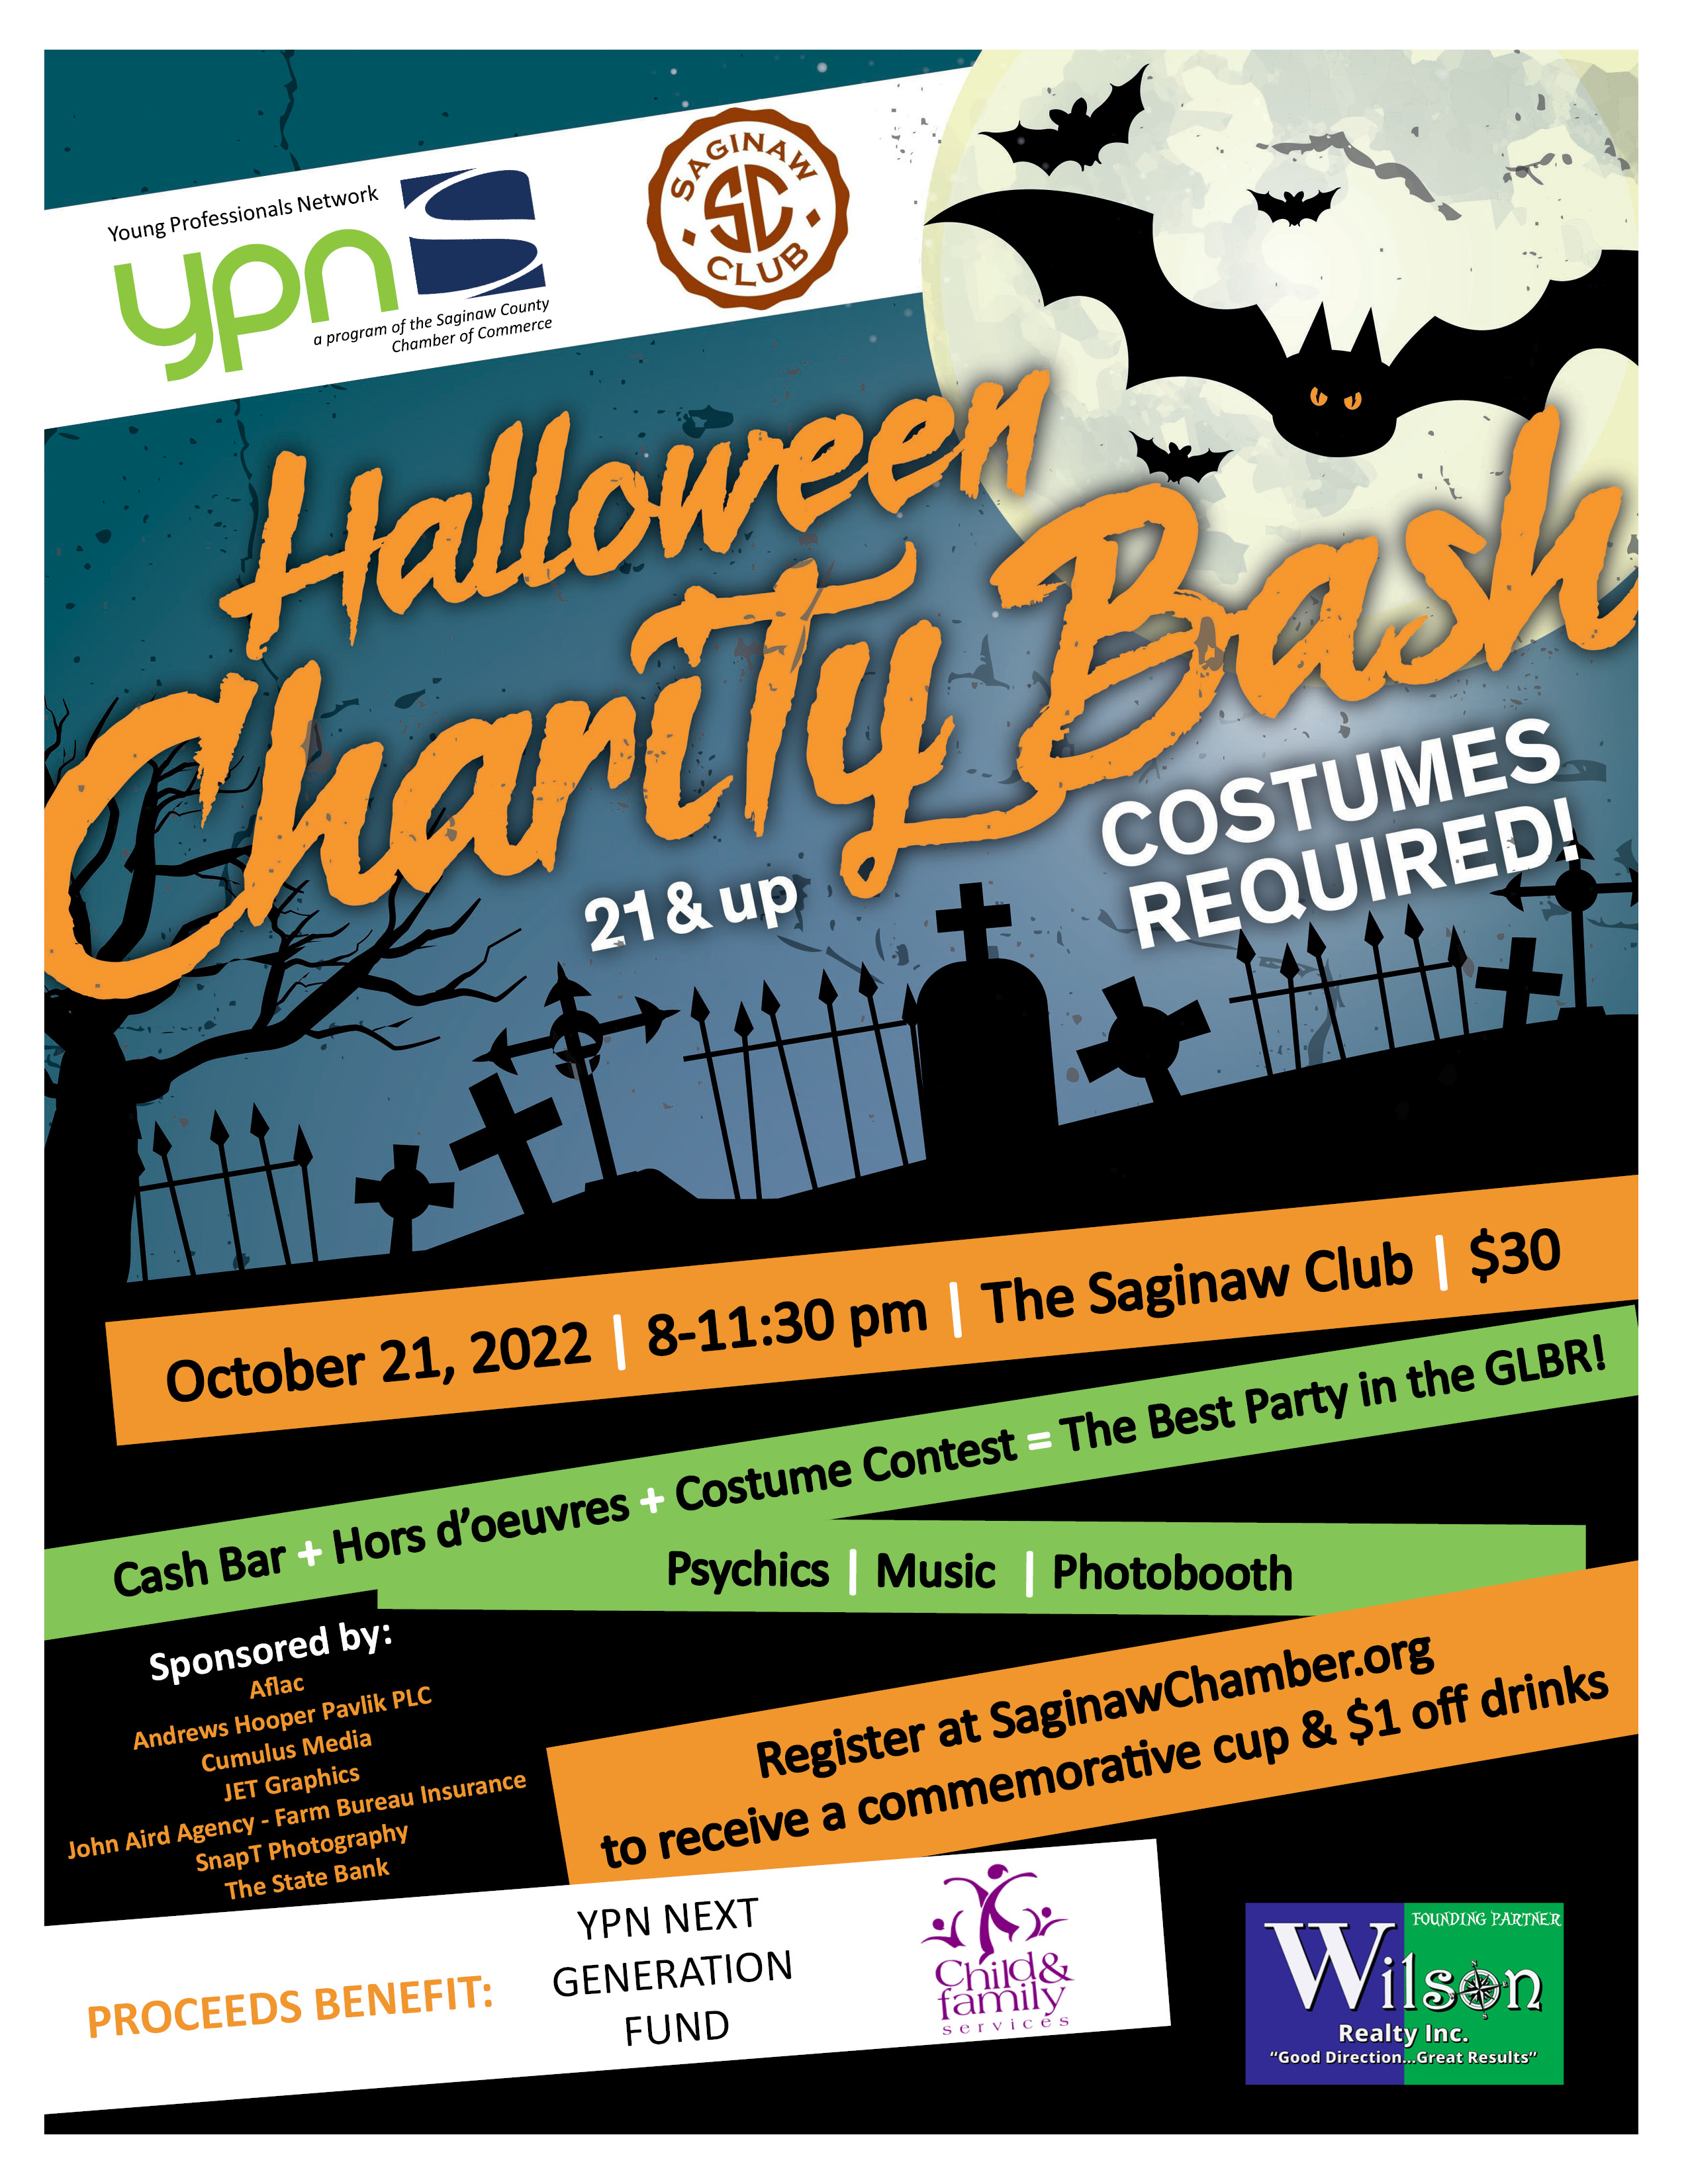 Halloween Charity Bash Invite 2022